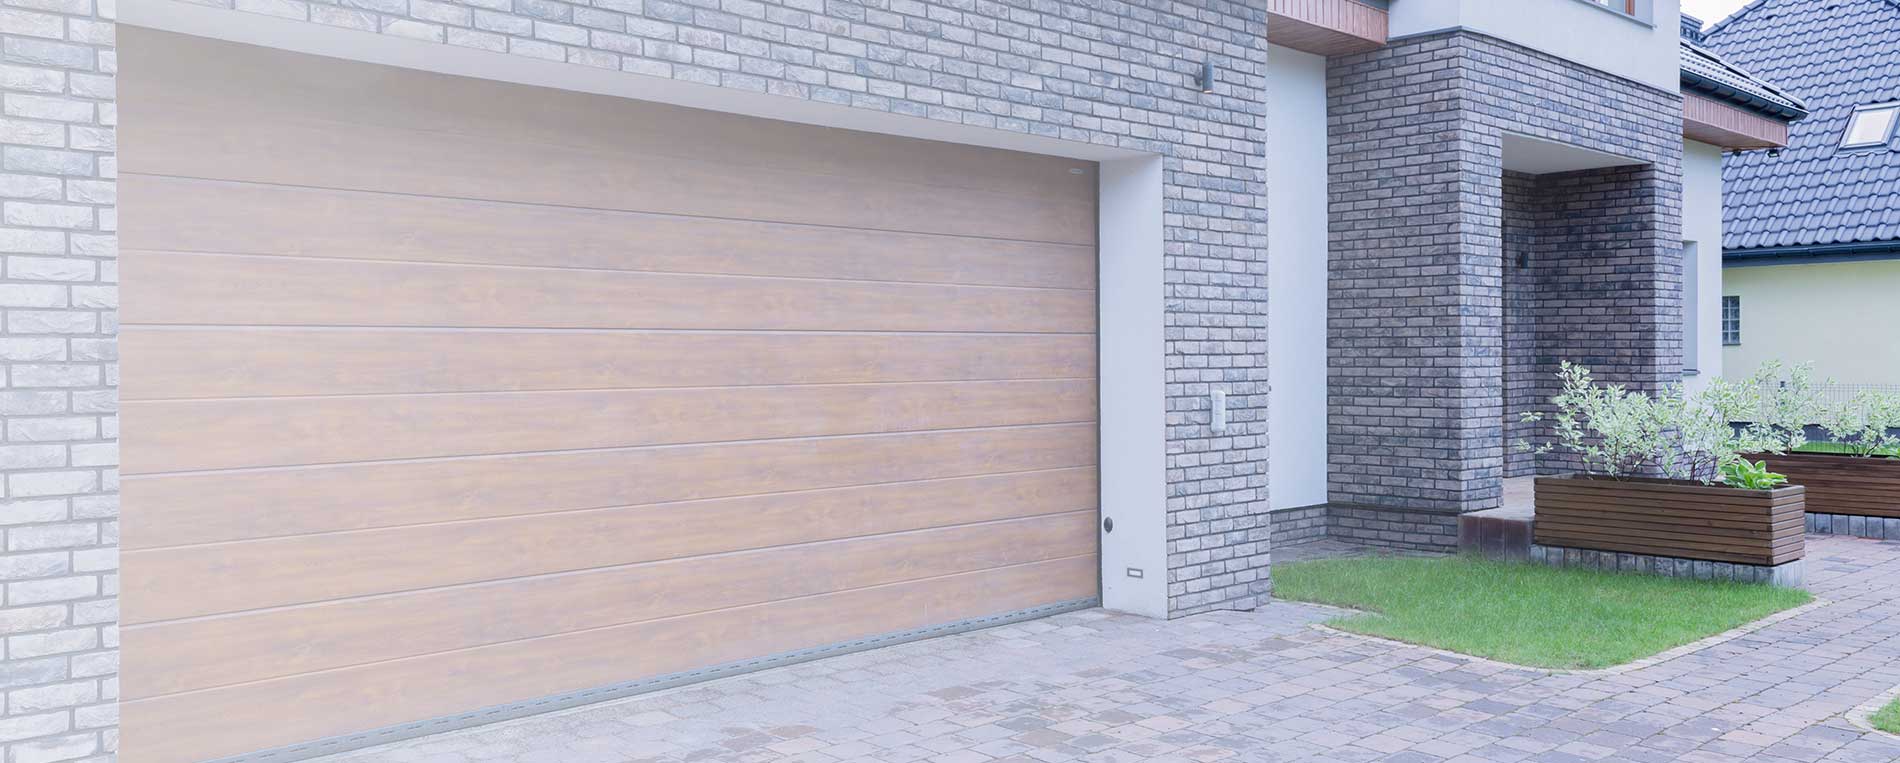 Is Your Garage Door Safe to Use?